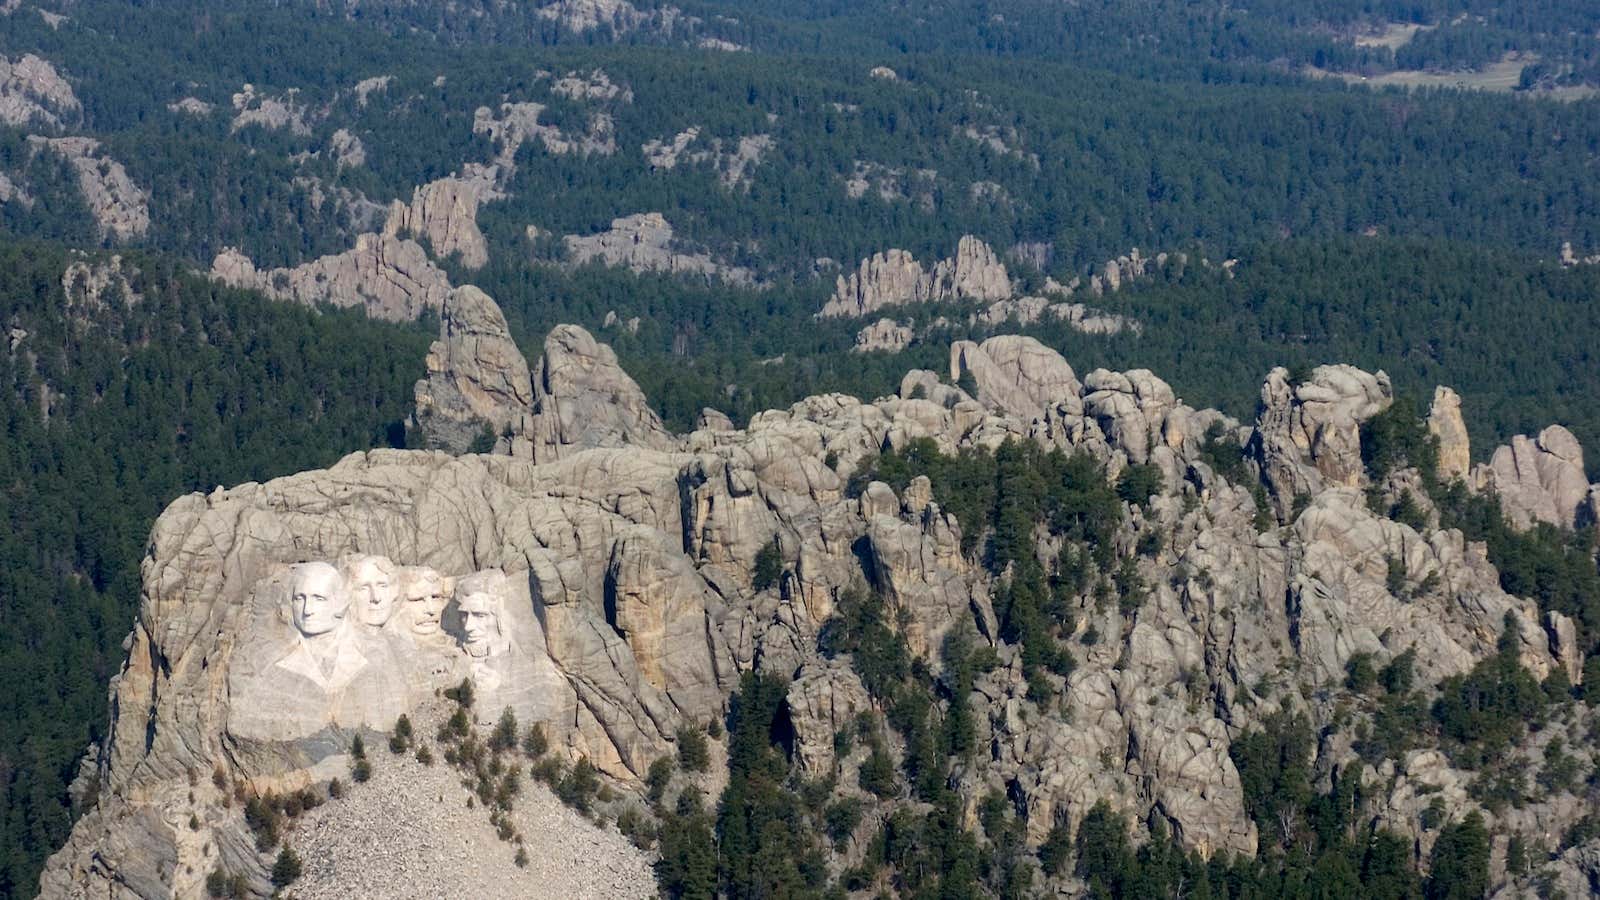 Mount Rushmore, Black Hills National Forest, South Dakota.